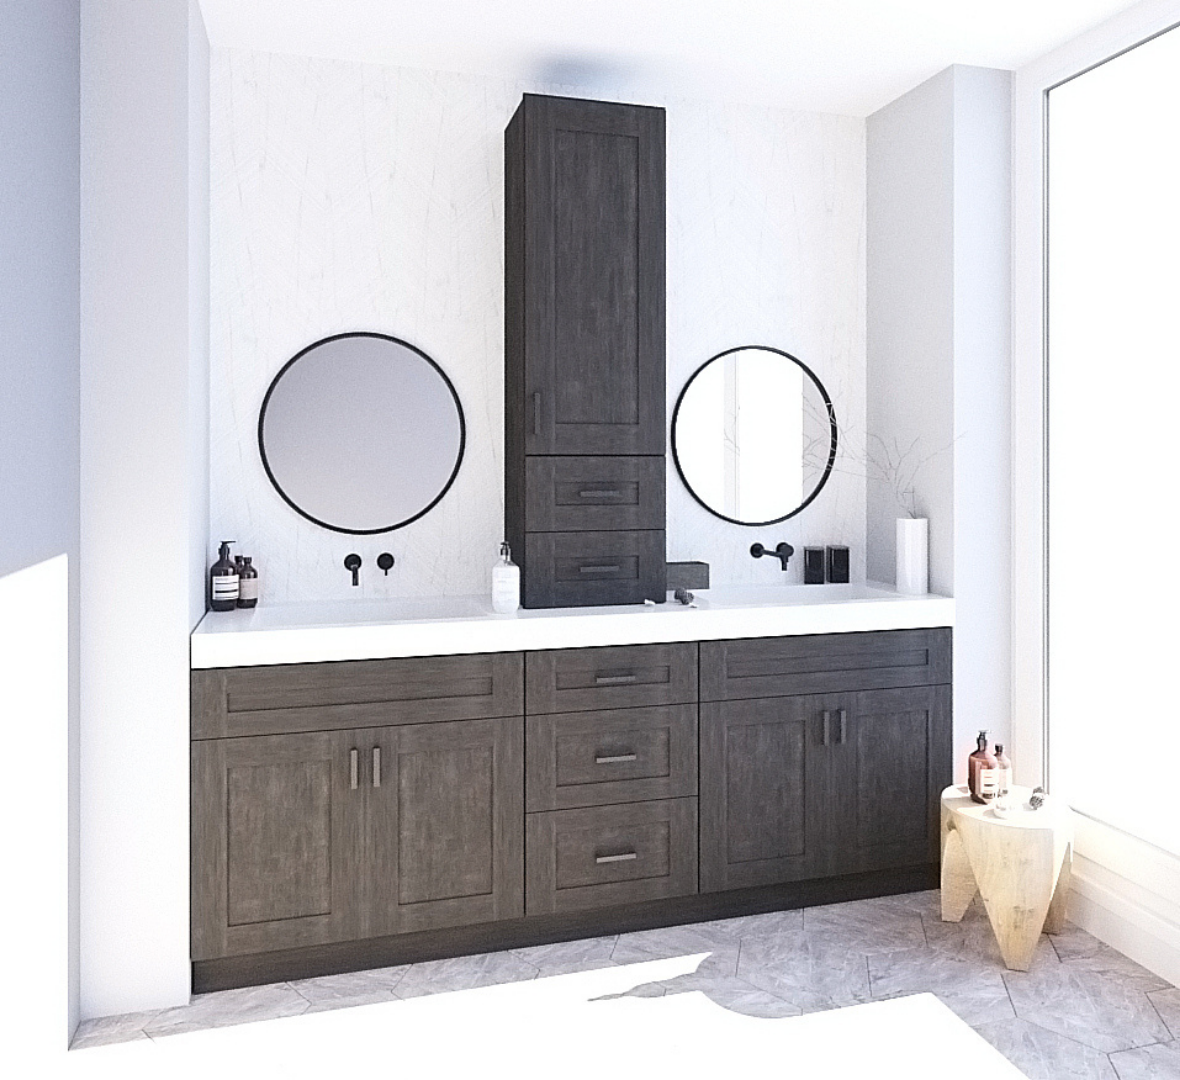 Cabinet Era - Kitchen Cabinets - Bathroom Vanity